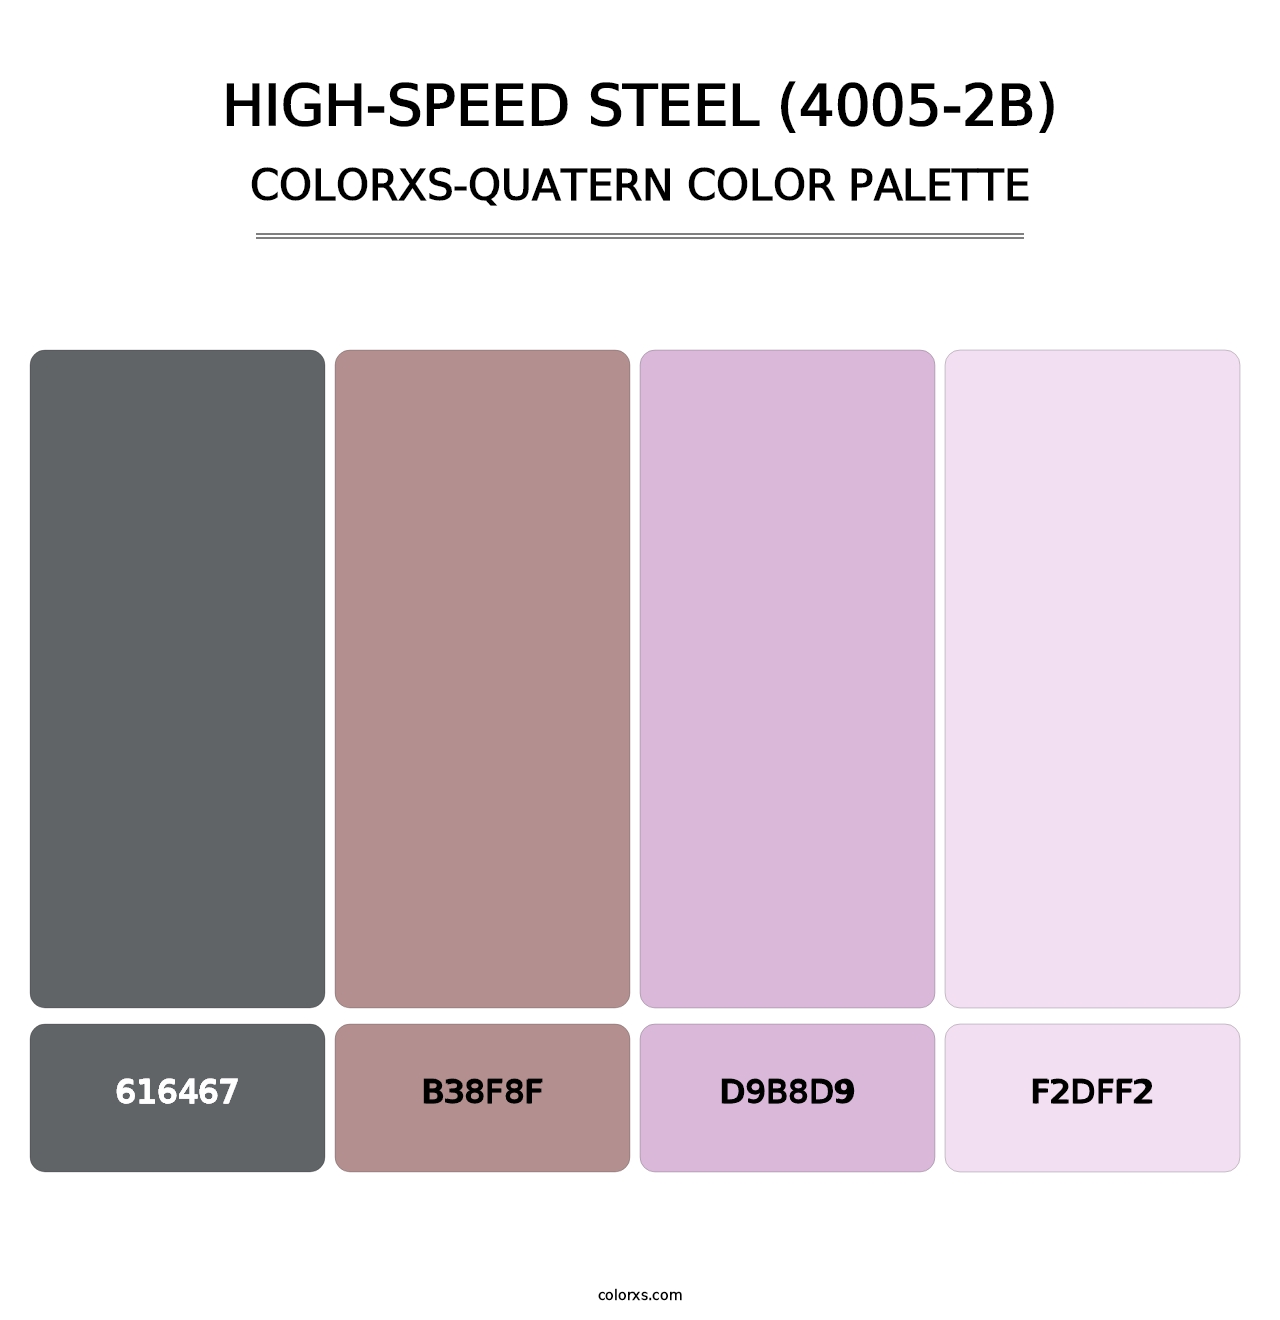 High-Speed Steel (4005-2B) - Colorxs Quatern Palette